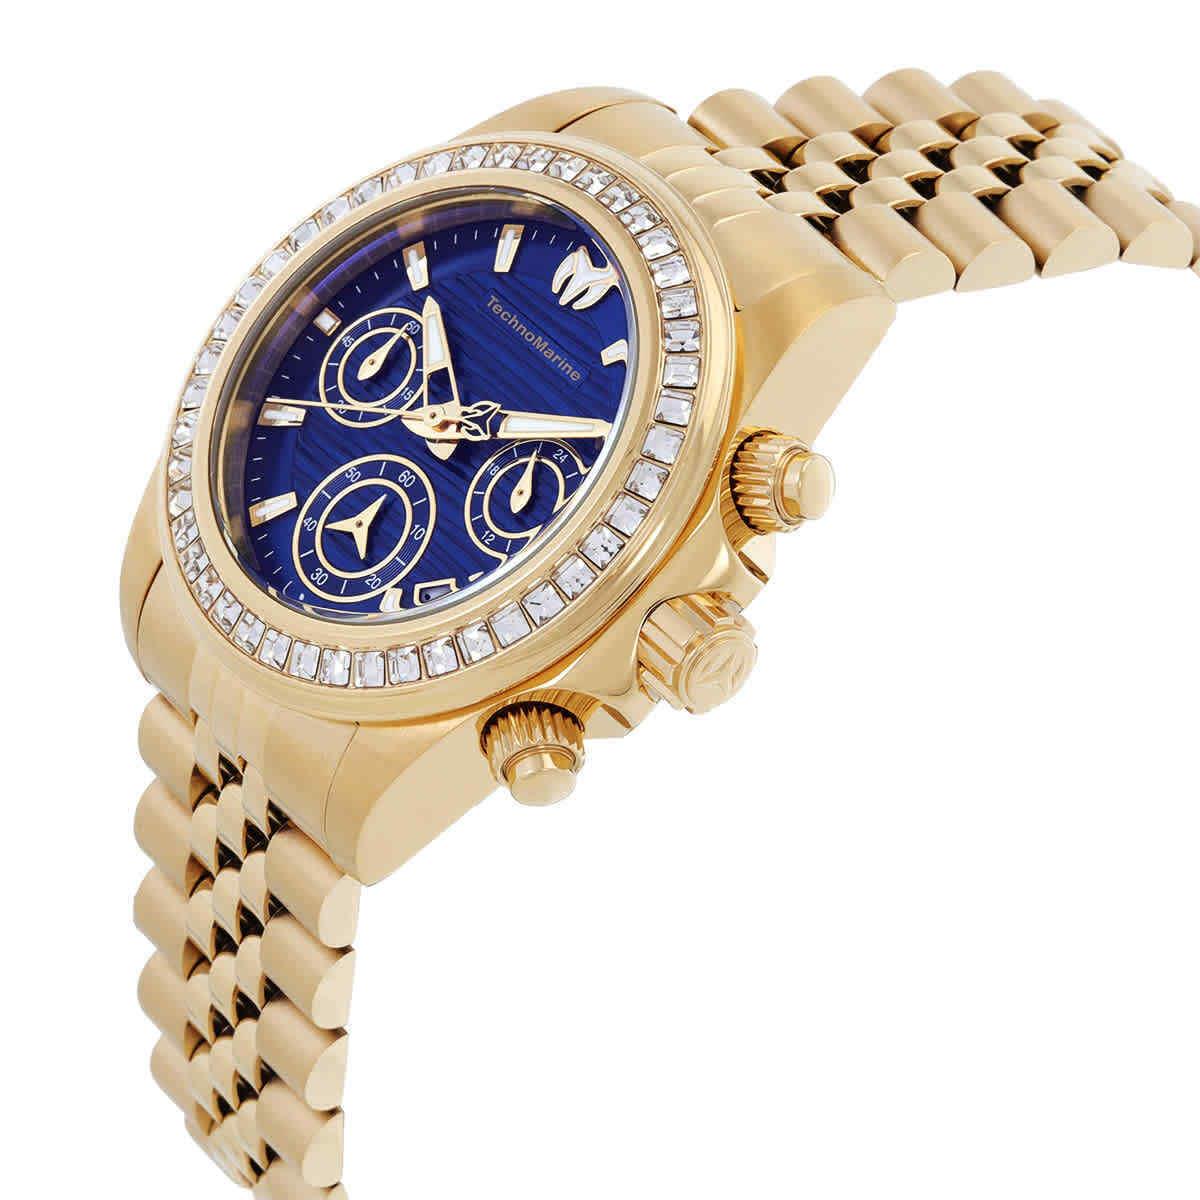 Technomarine Manta Chronograph Gmt Quartz Blue Dial Ladies Watch TM-222027 - Dial: Blue, Band: Gold-tone, Bezel: Gold-tone